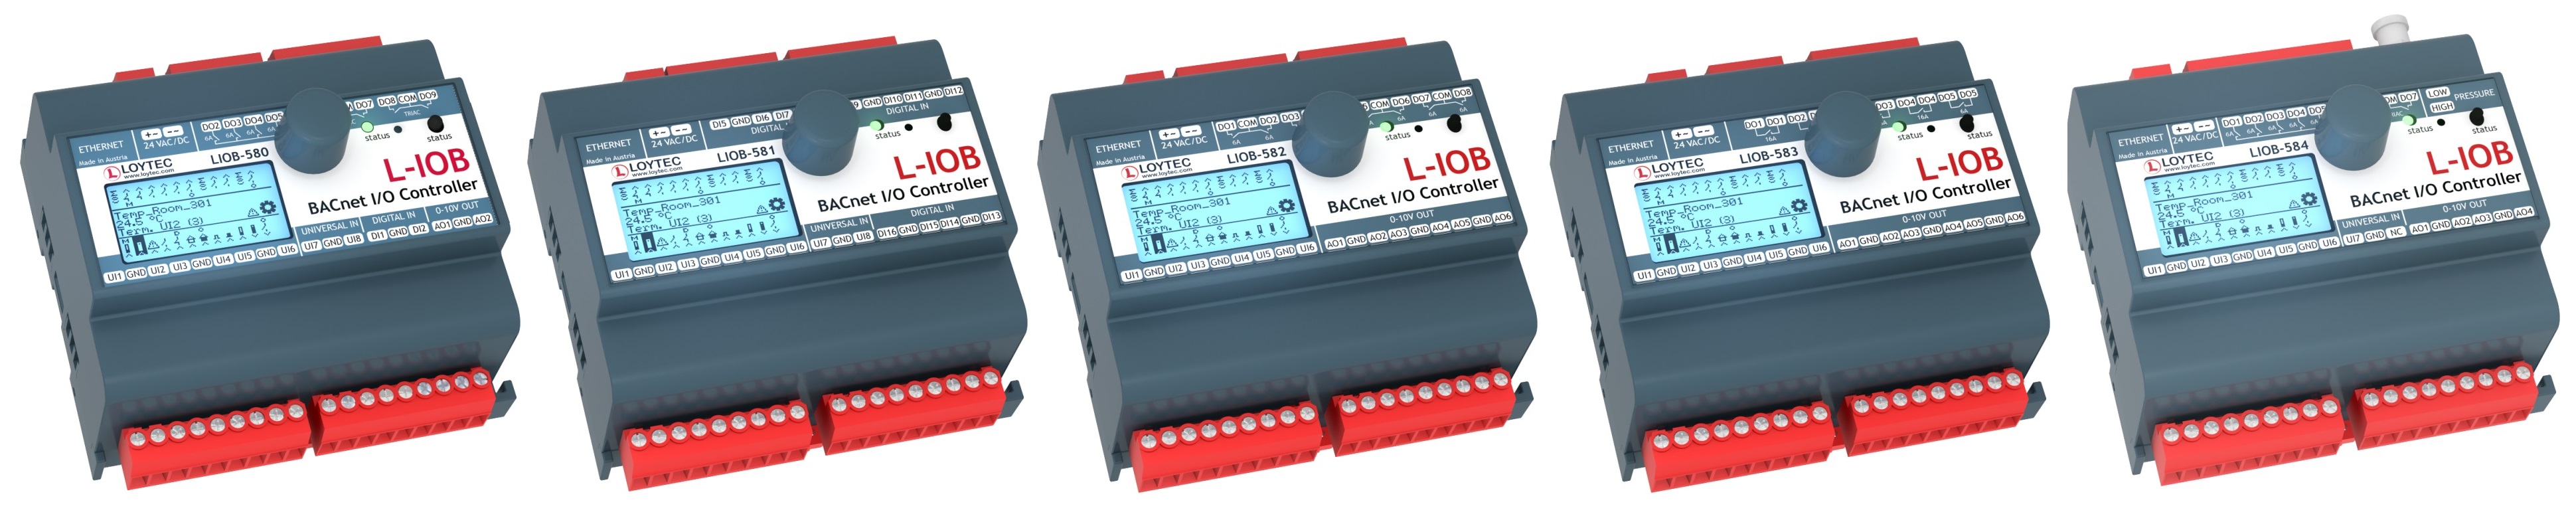 LIOB-BIP I/O Controller BACnet/IP